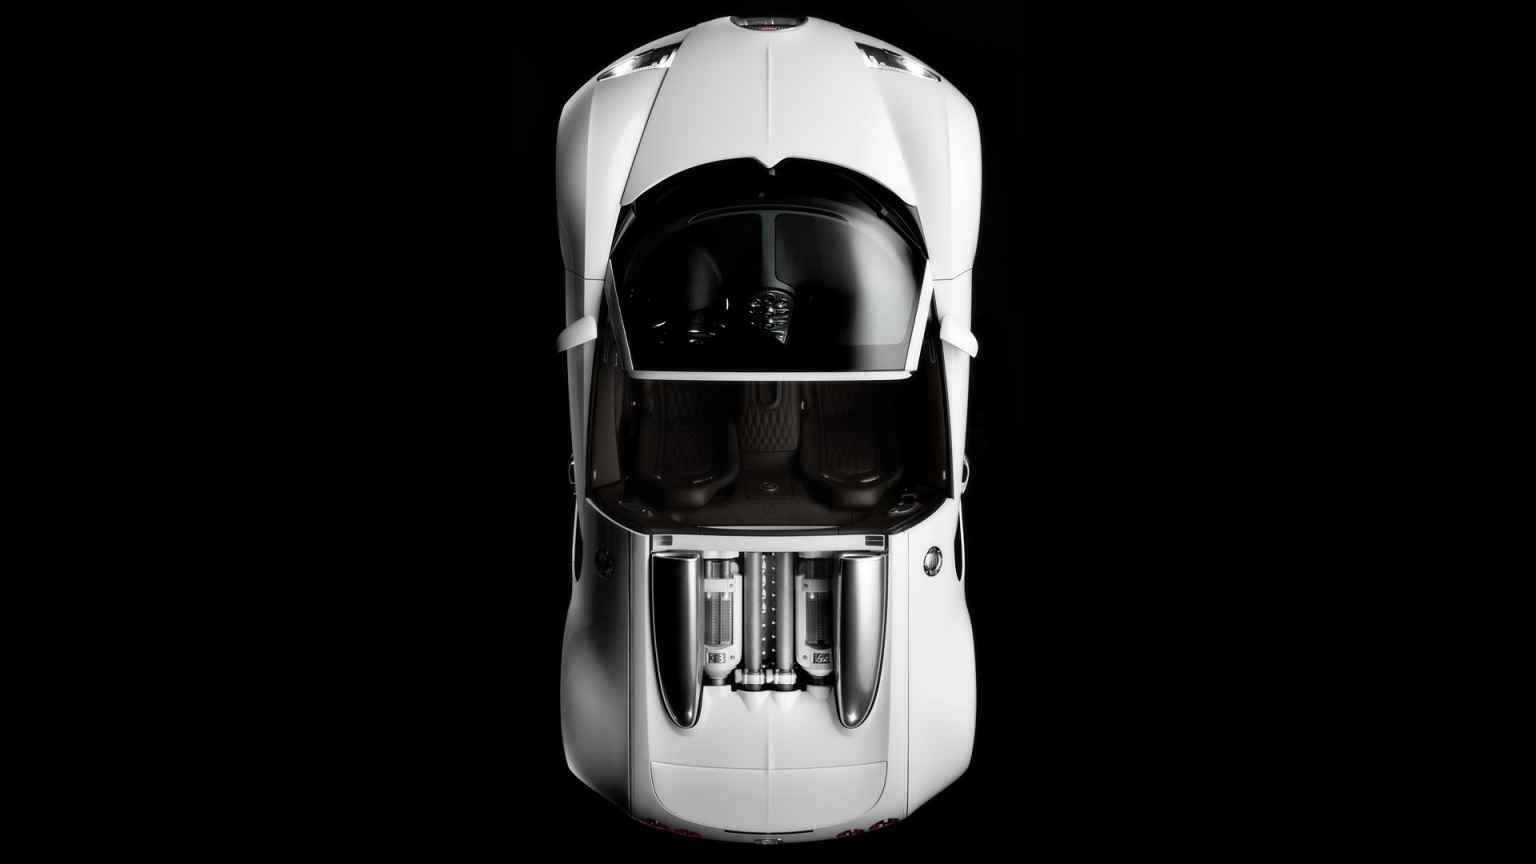 Bugatti Veyron 16.4 Grand Sport Production Version 2009 - Studio Top for 1536 x 864 HDTV resolution